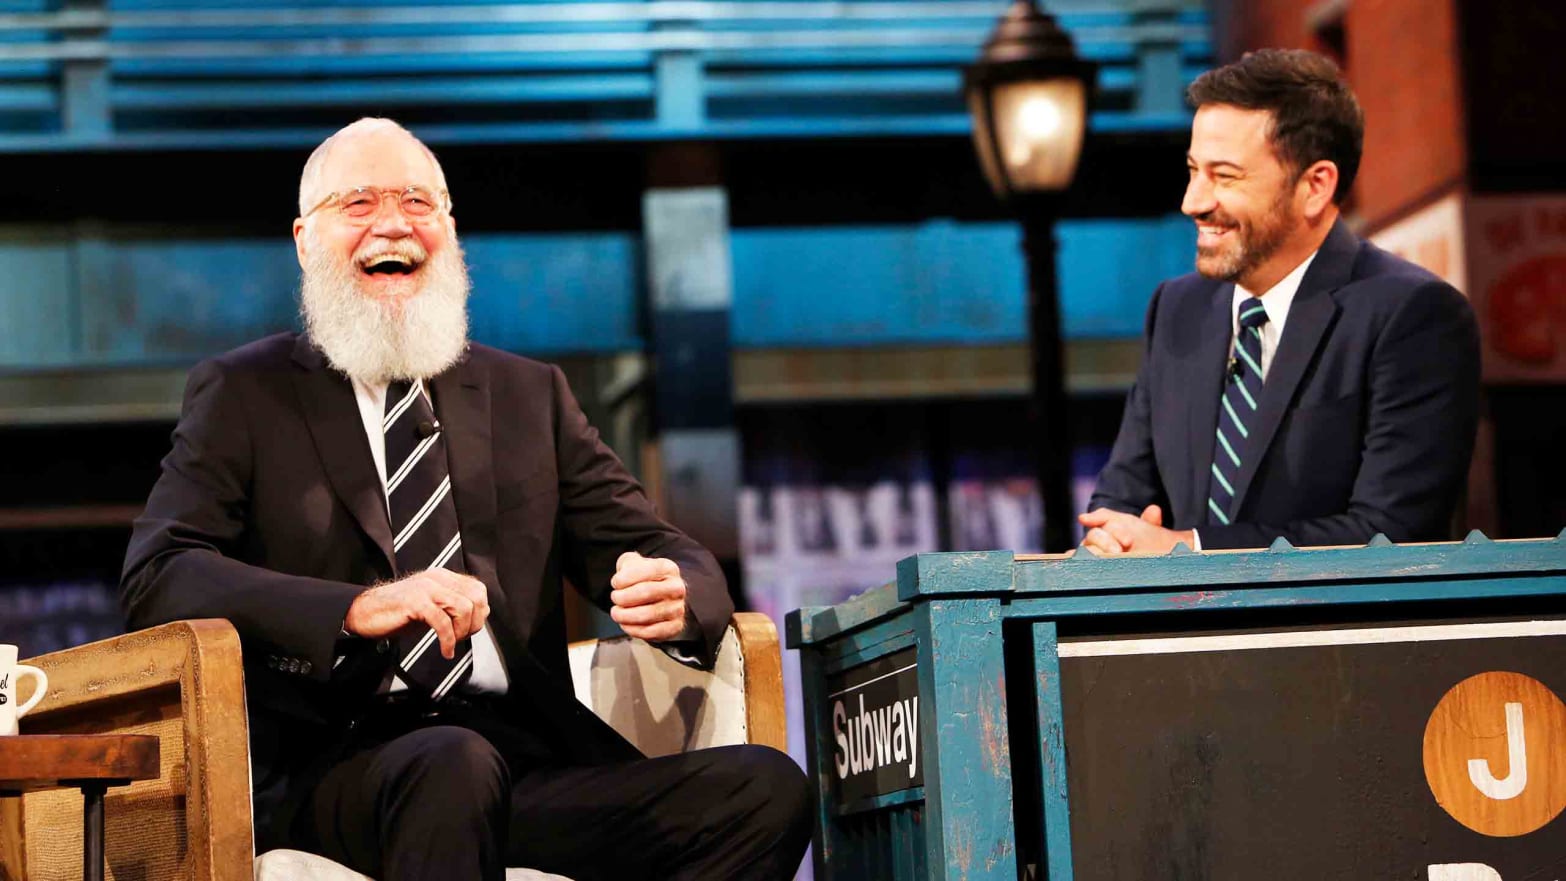 David Letterman Ribs Jimmy Fallon and Conan O’Brien on ‘Jimmy Kimmel Live’